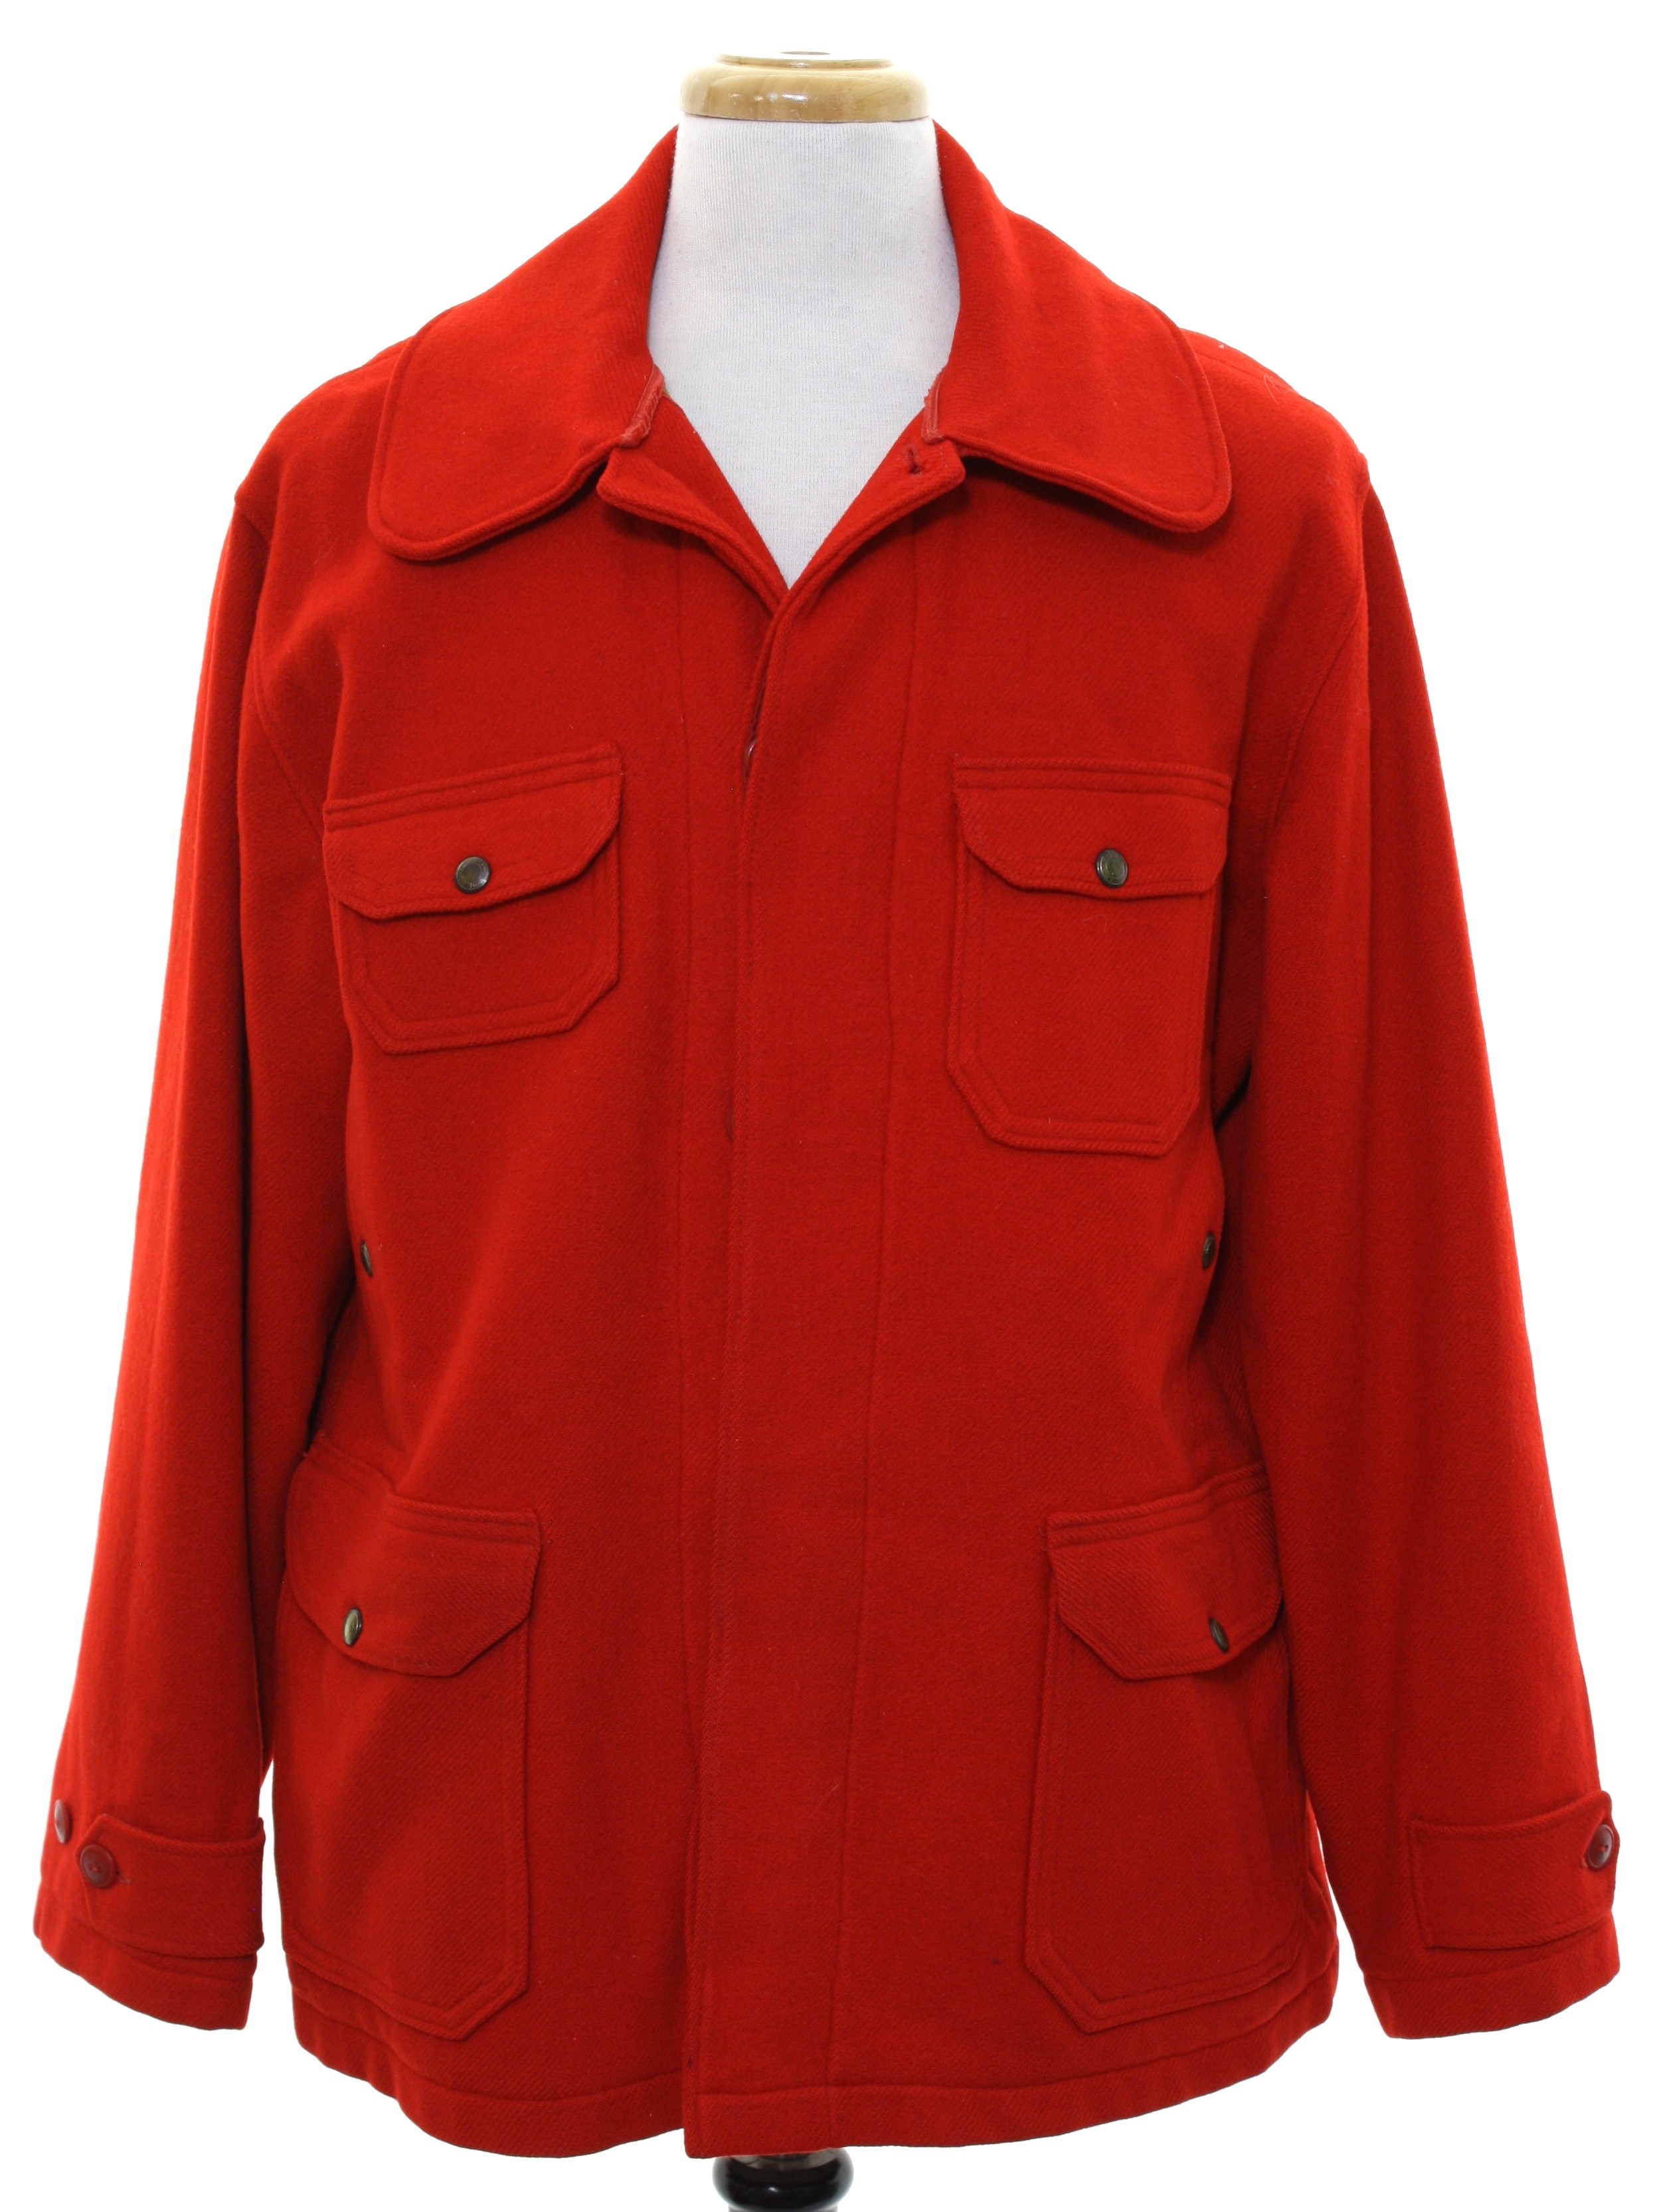 Vintage Woolrich 1950s Jacket: Early 50s -Woolrich- Mens red heavy wool ...